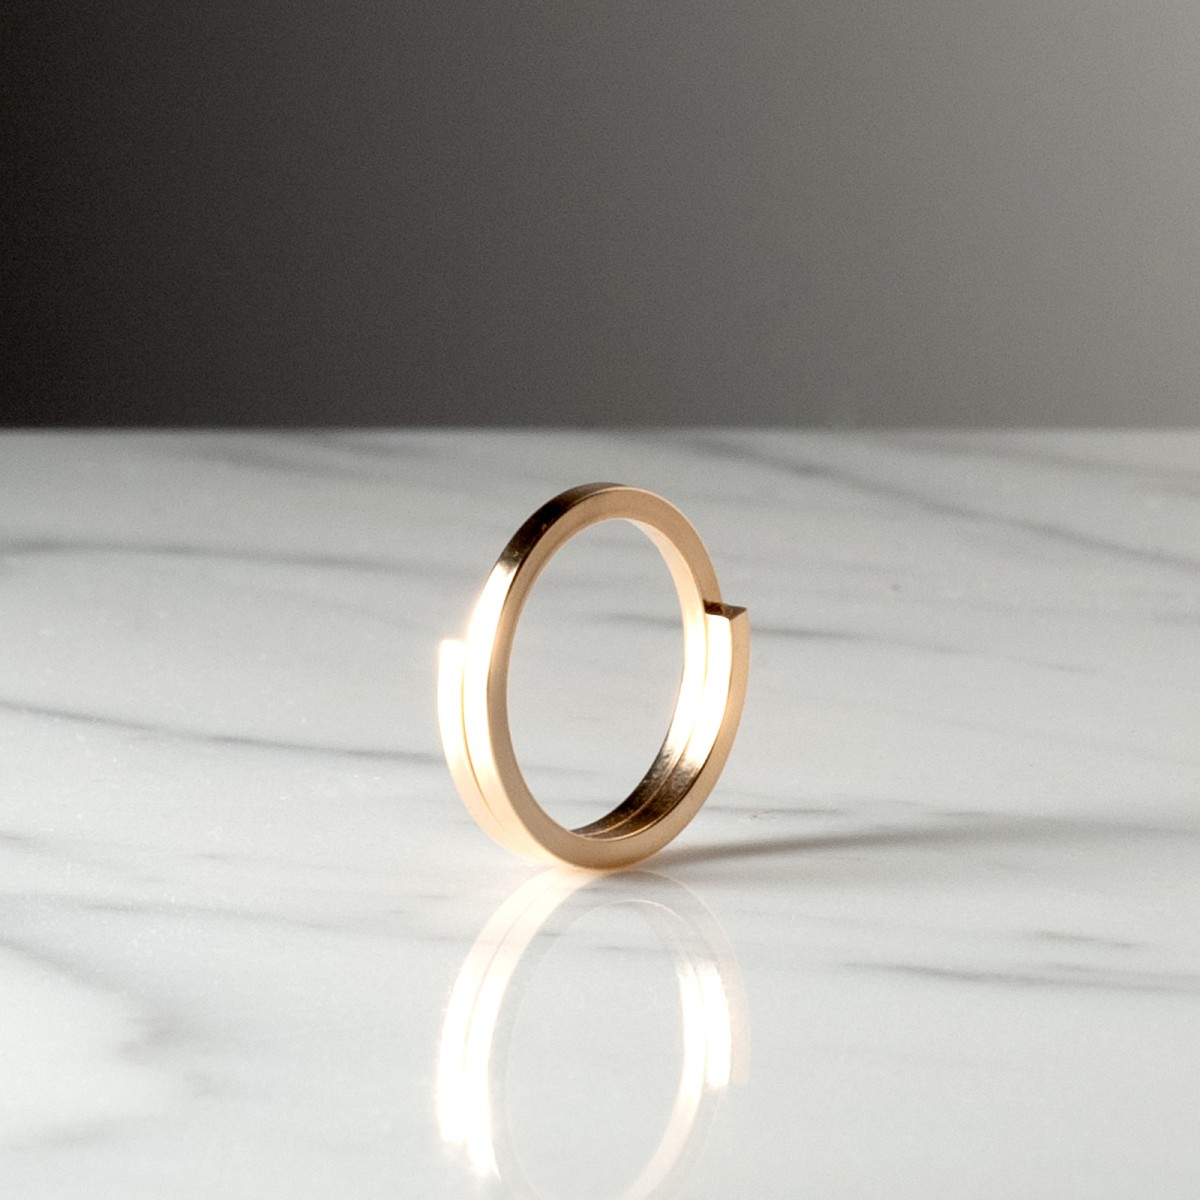 GEO SQUARE 2X2 2056 - Wedding ring handmade in France